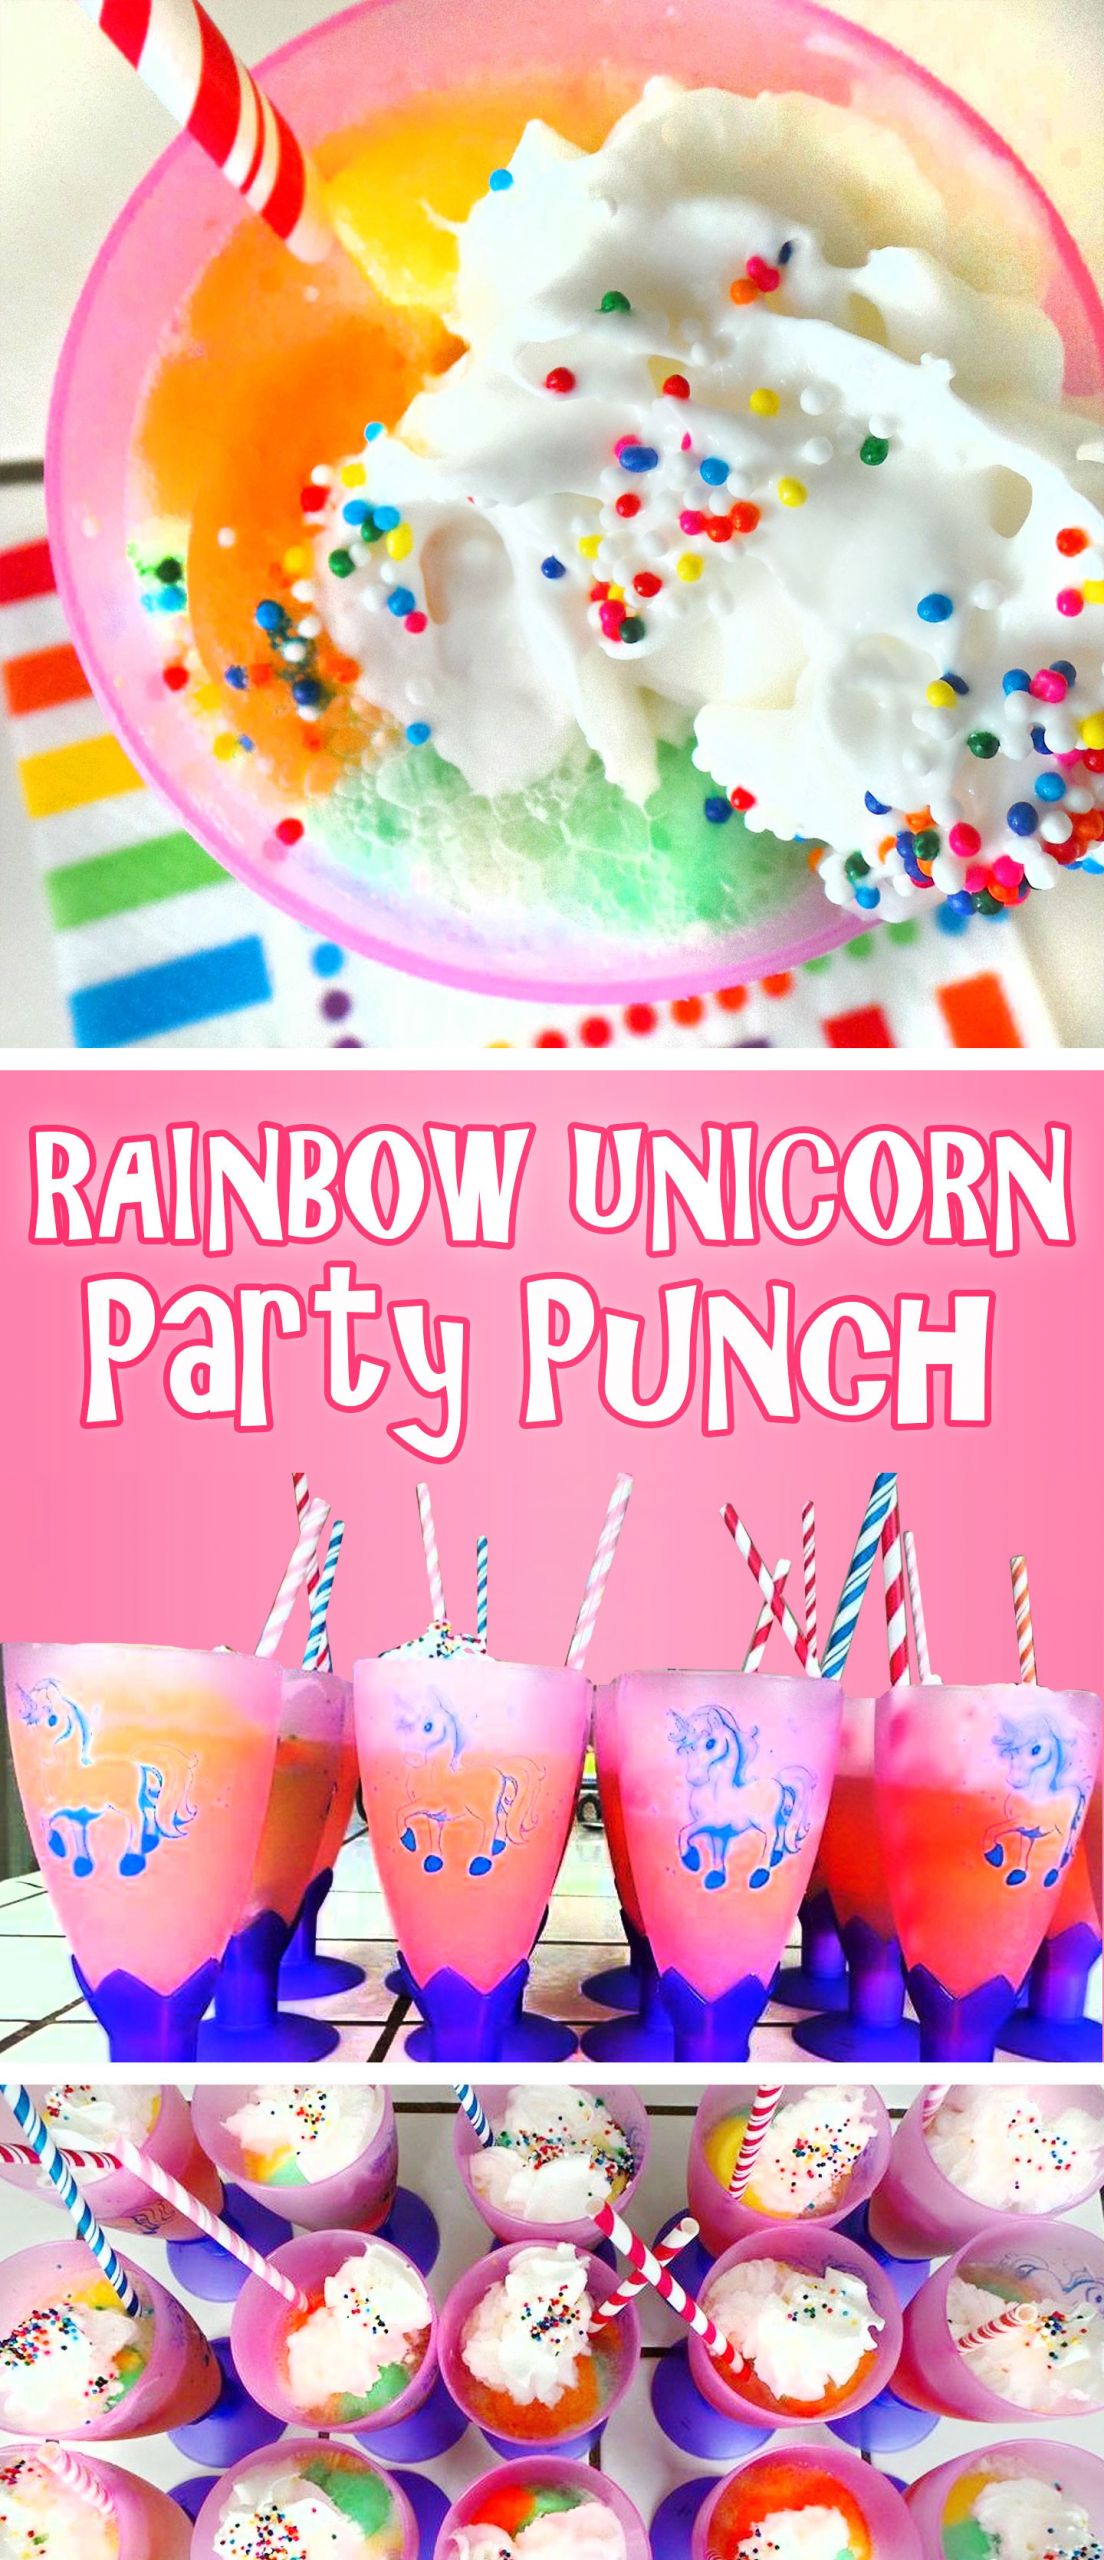 Unicorn And Rainbow Party Ideas
 Rainbow Unicorn Party Punch